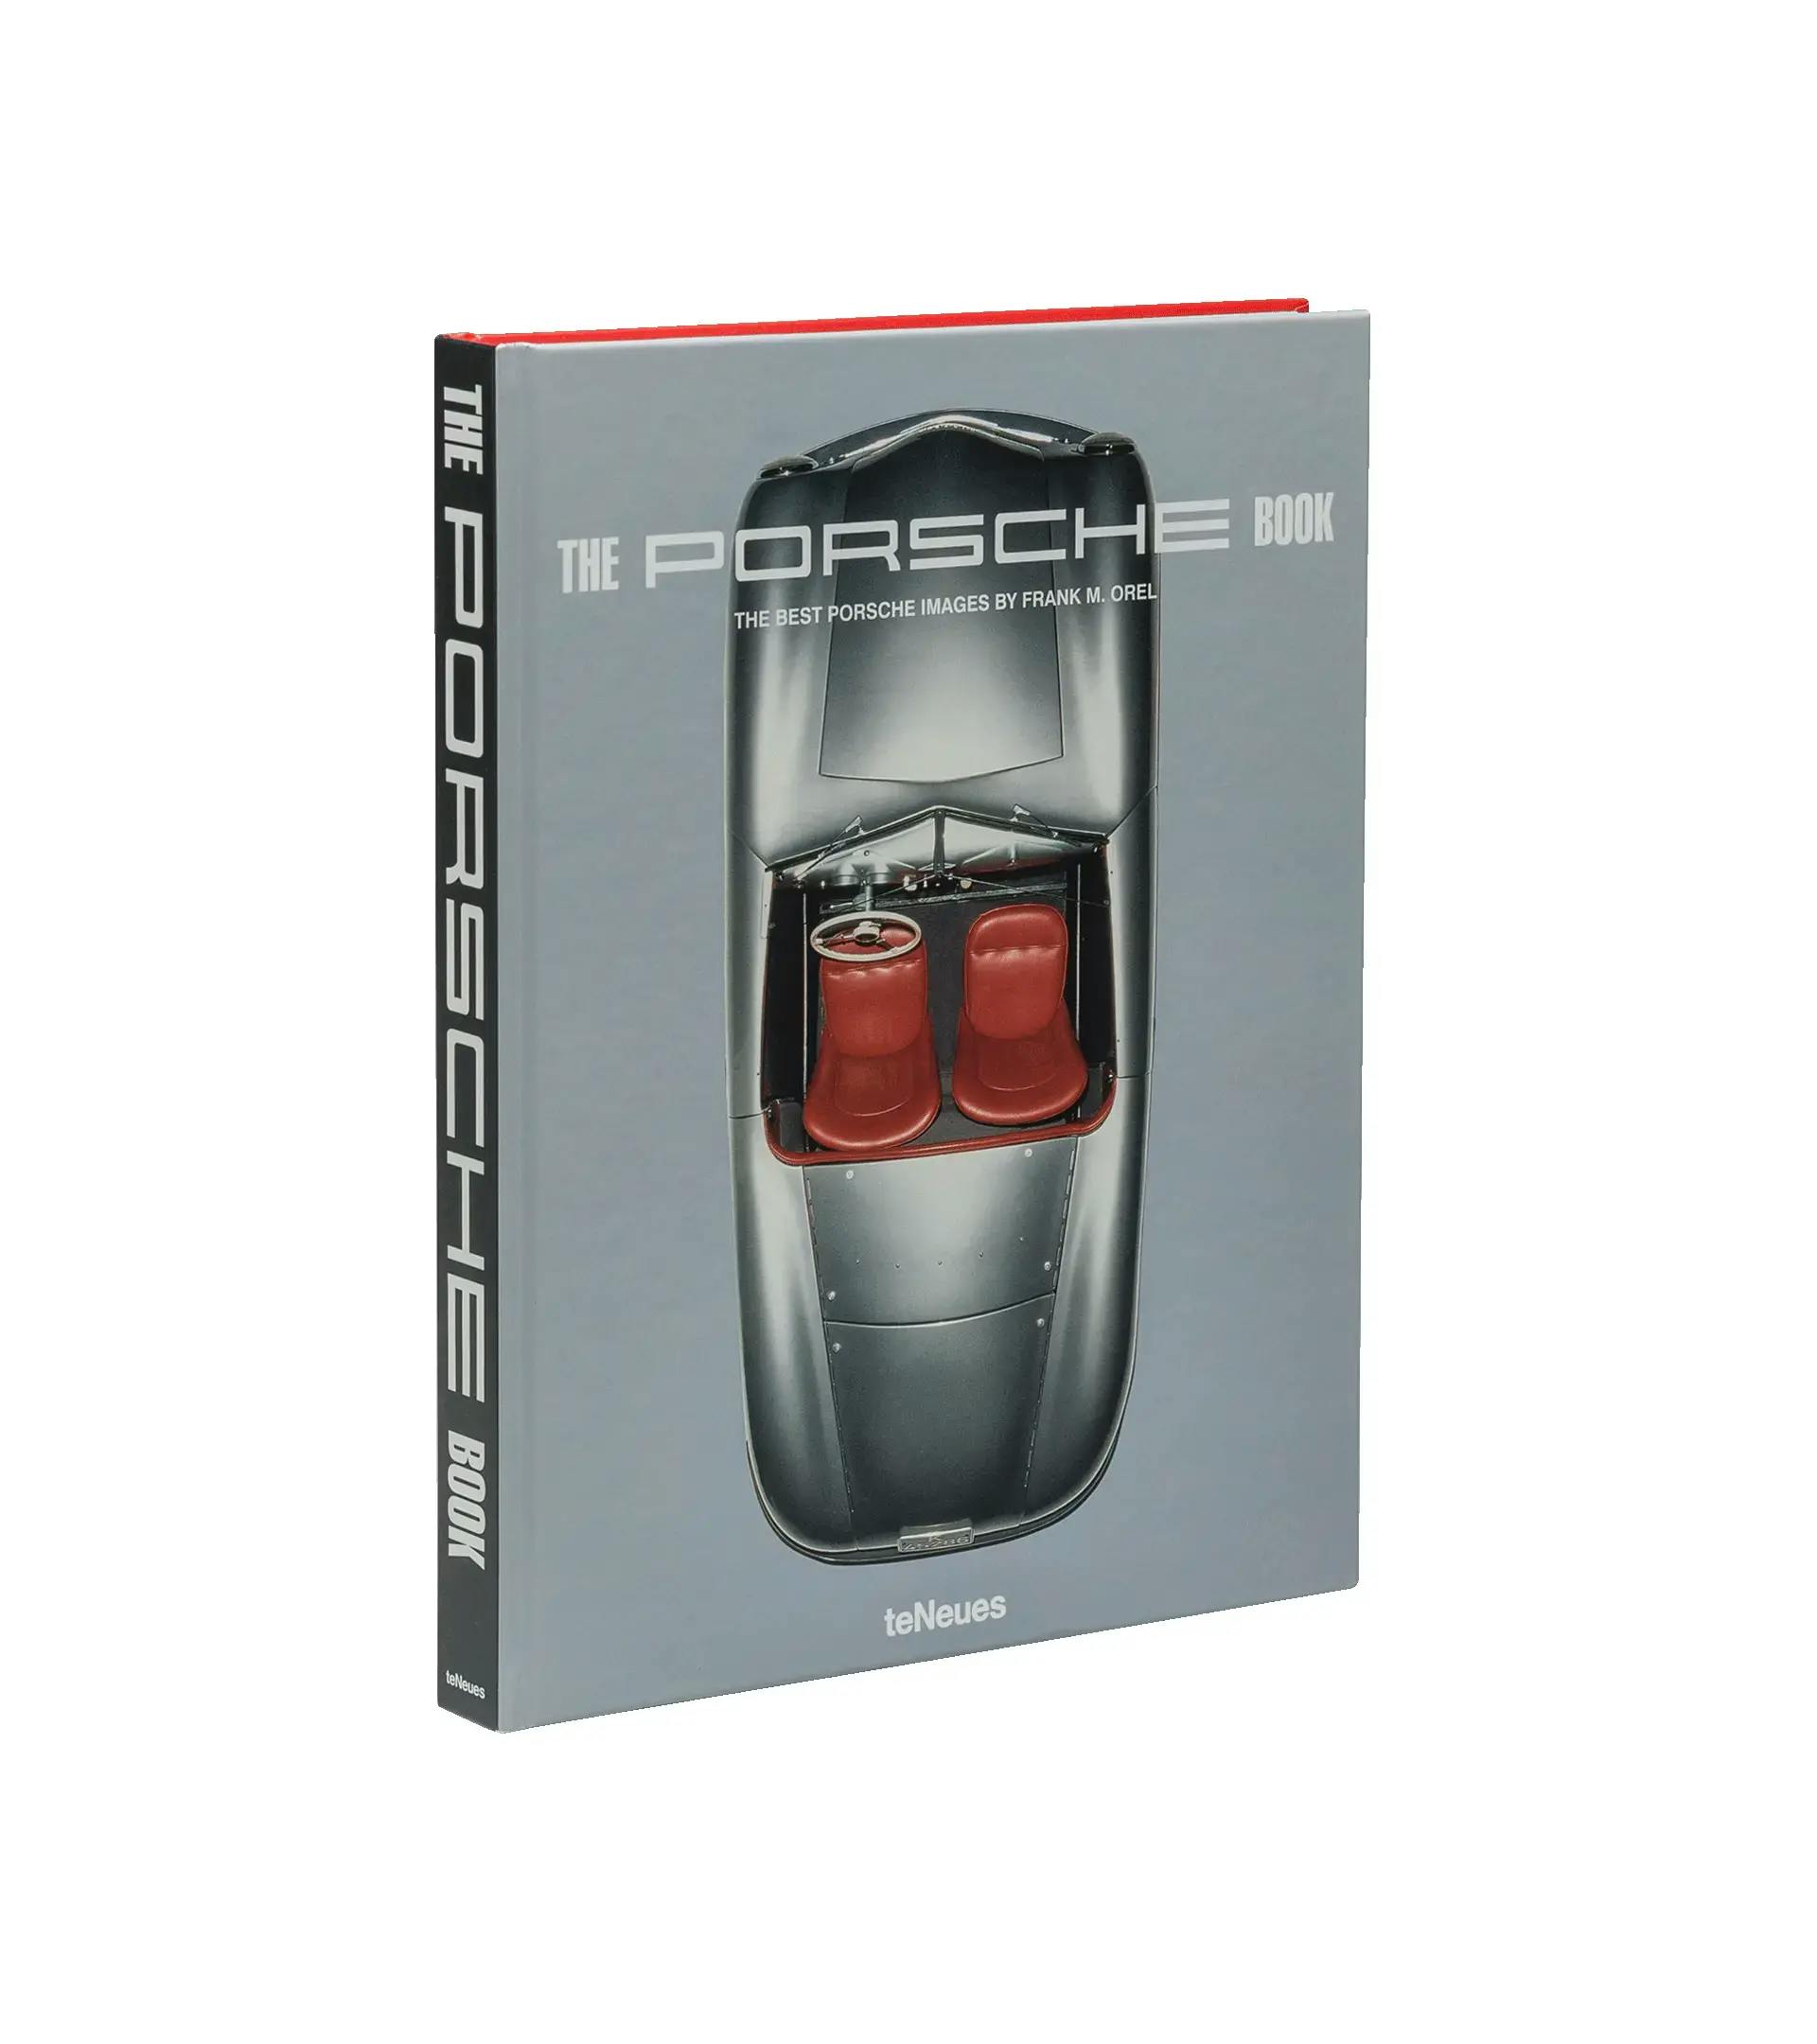 The Porsche Book - The Best Porsche Images by Frank M. Orel 1